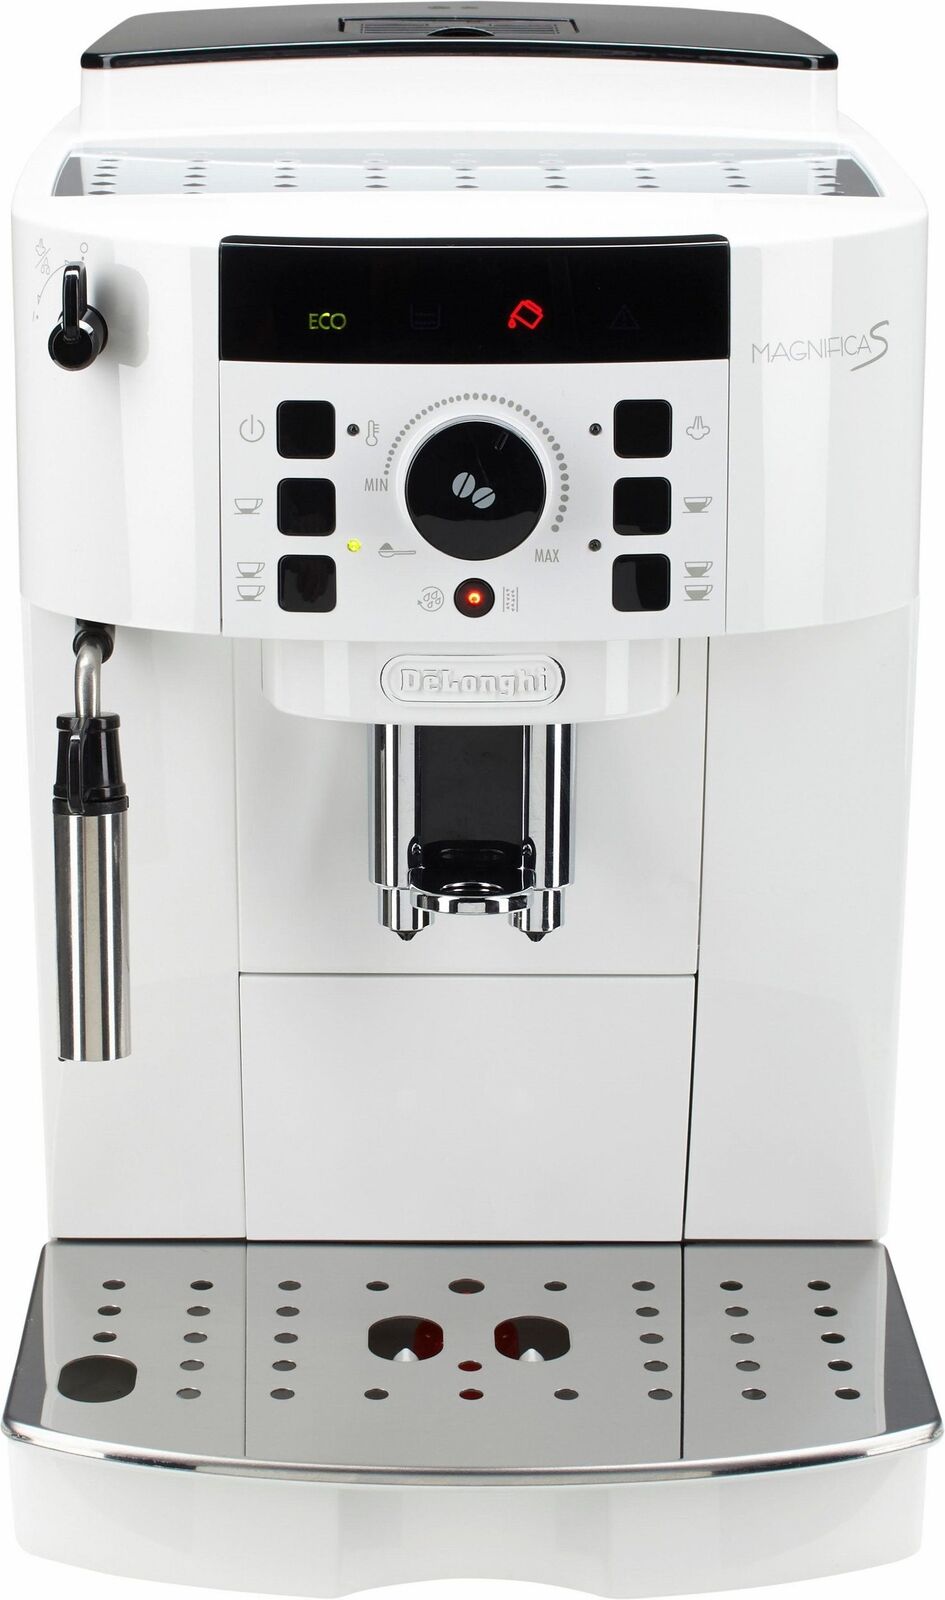 Bild zu [B-Ware] Kaffeevollautomat De’Longhi Magnifica S ECAM21.118.B für 197,10€ (Vergleich: 300,95€)